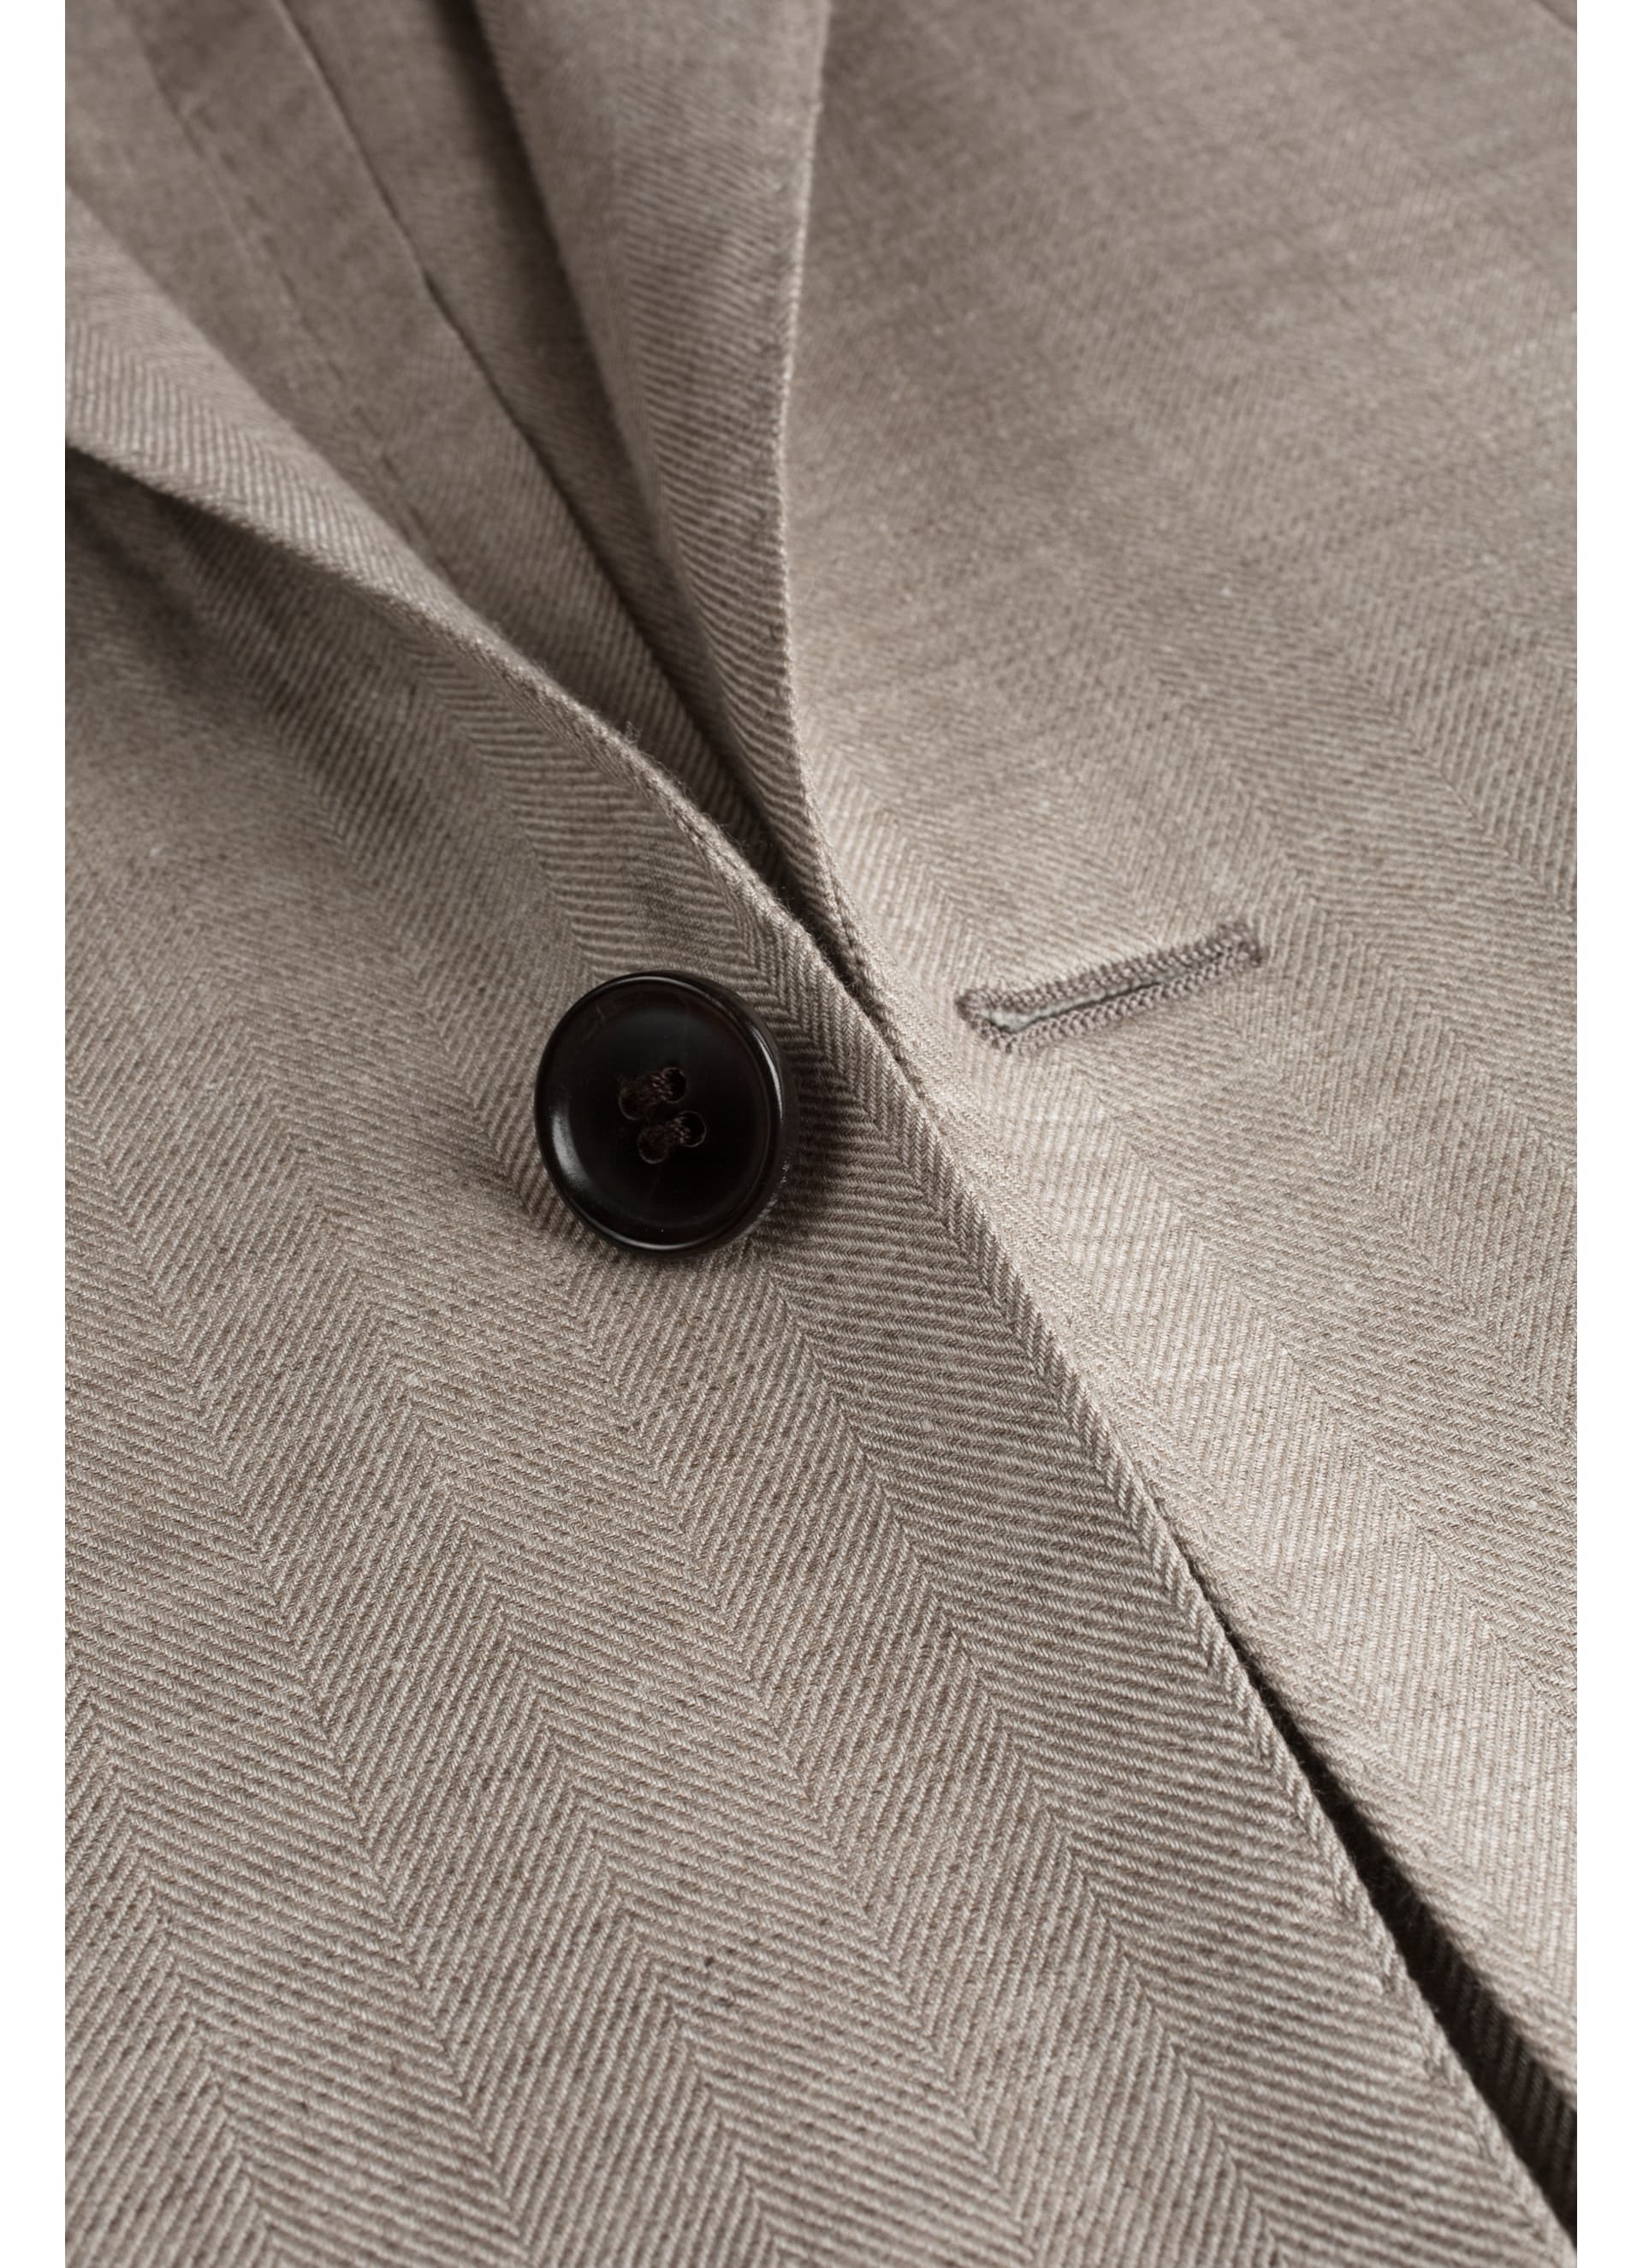 Jacket Light Brown Herringbone Biella C1101i | Suitsupply Online Store